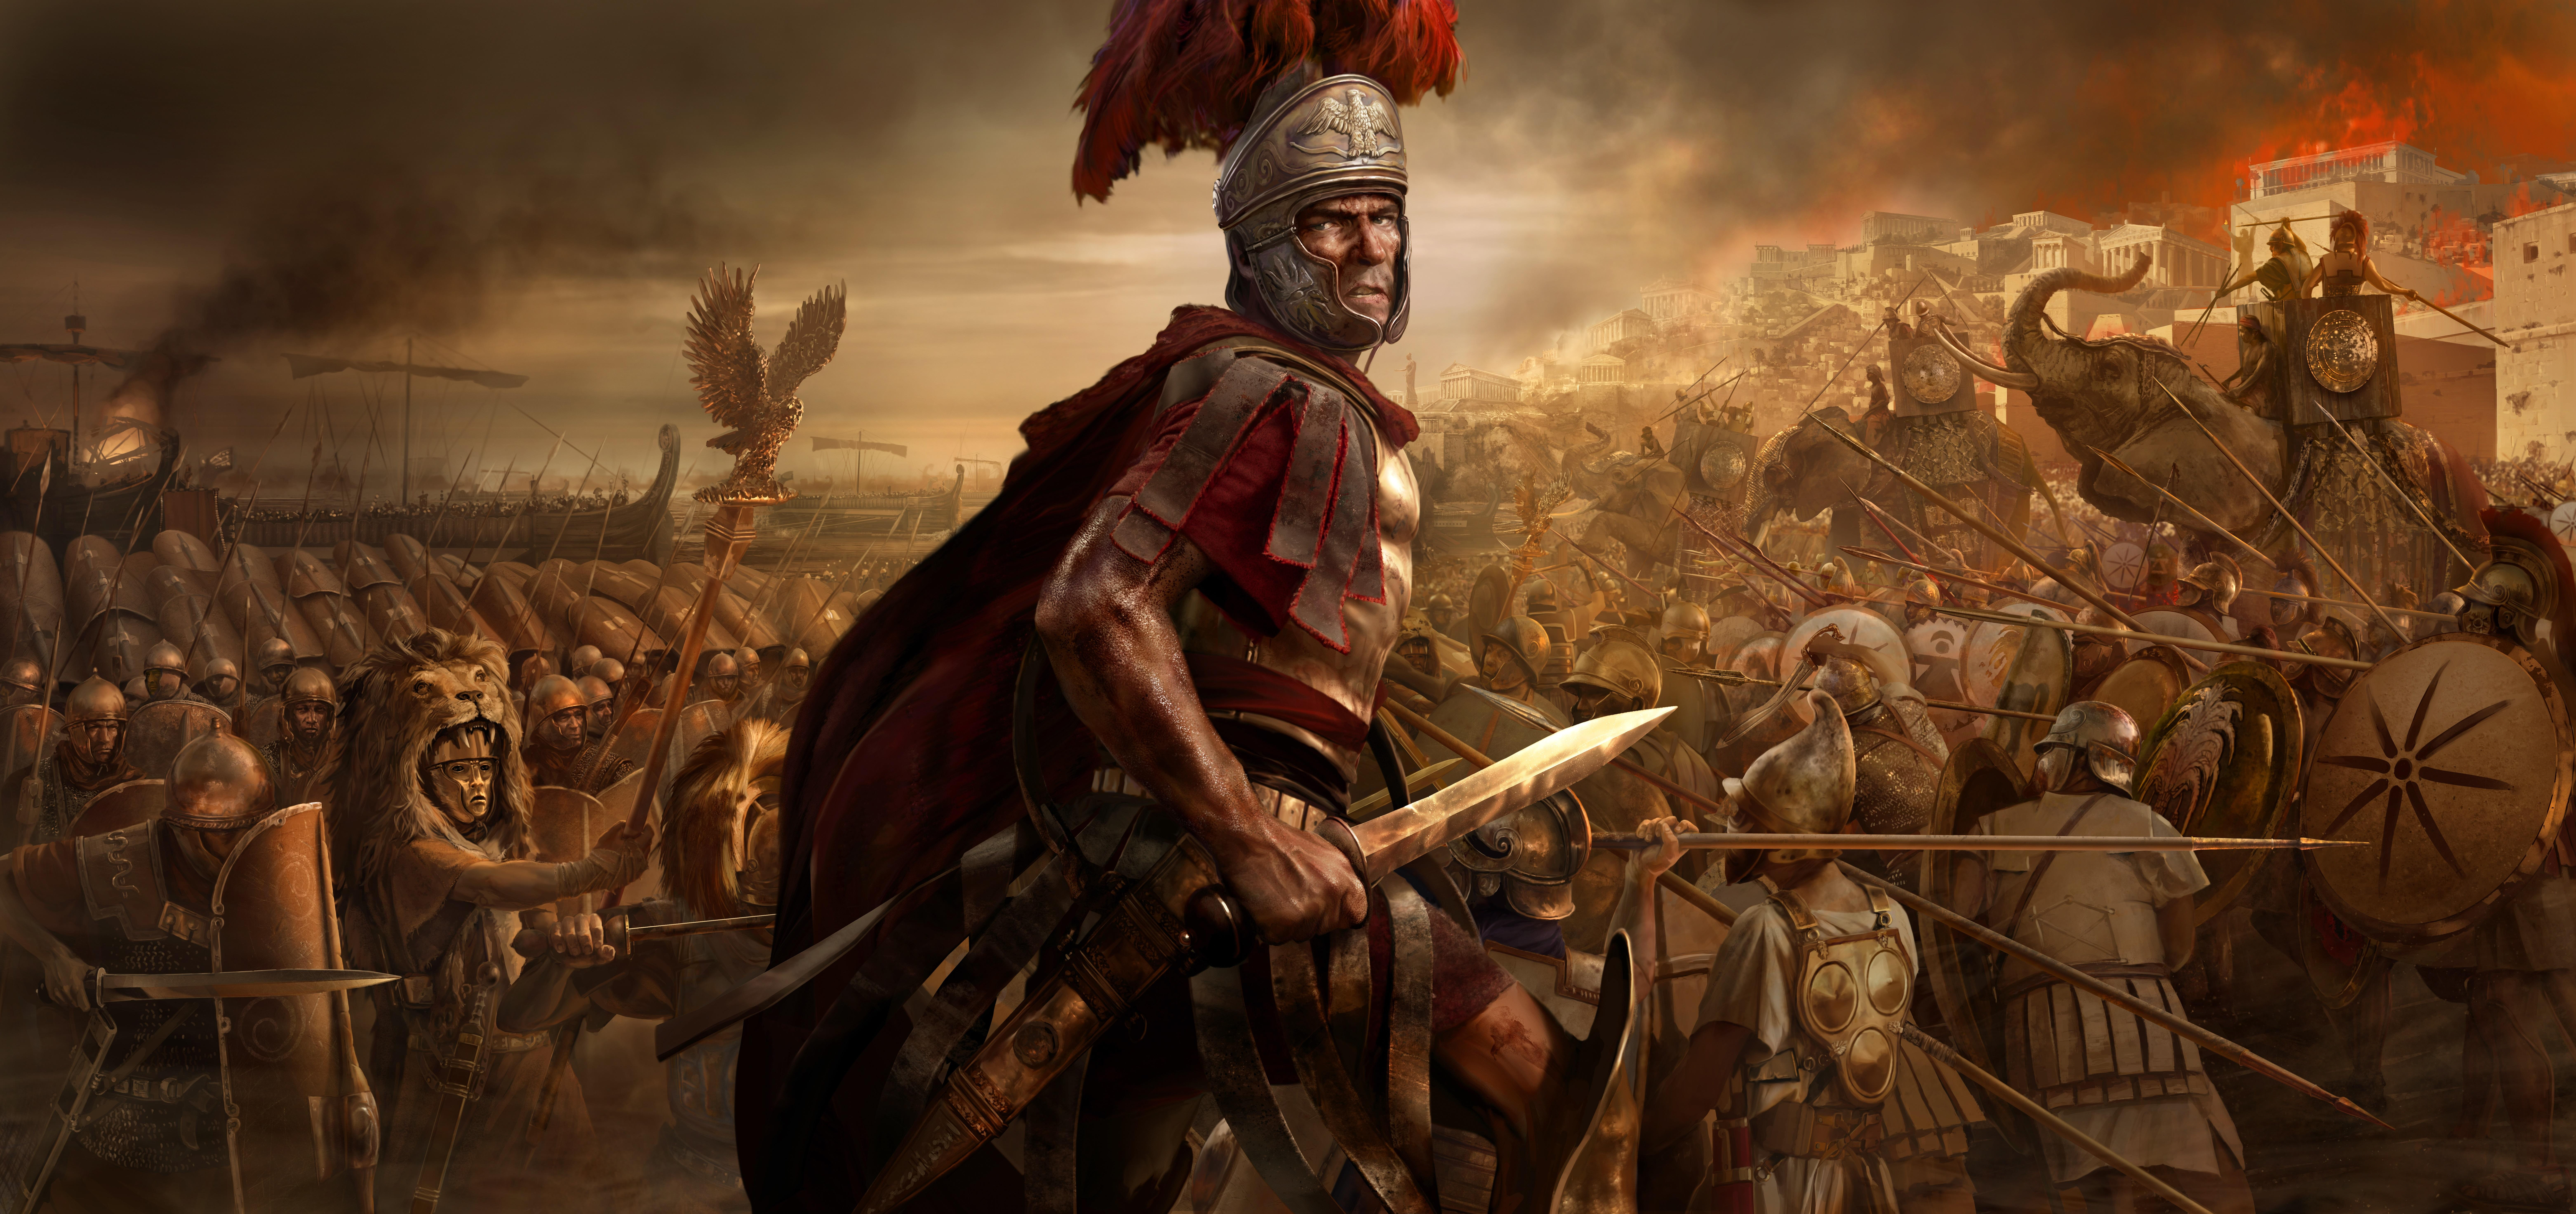 Rom battle. Роме тотал вар 2. Рим тотал вар 2 римские легионеры. Римский Центурион арт битва. Легионеры Рим 2 тотал вар.